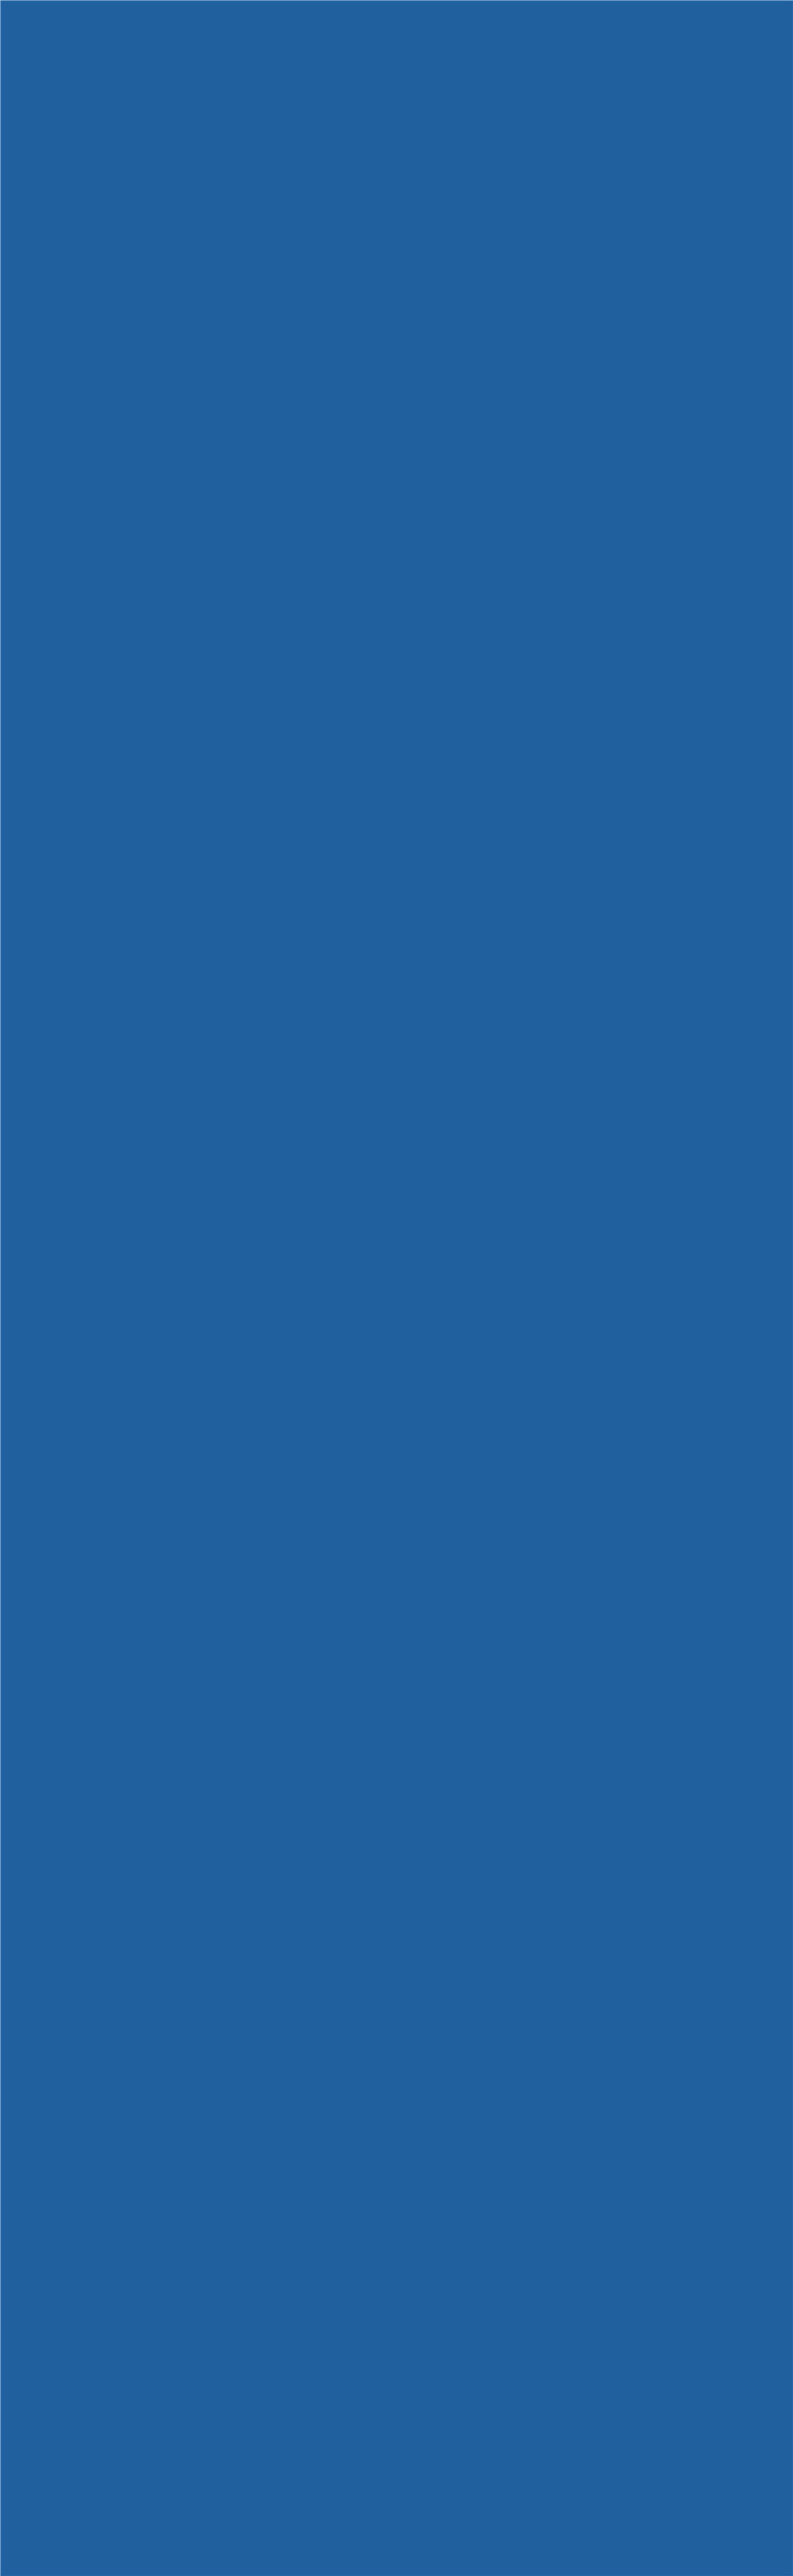 NF-2LB260845-017经典蓝纯色瓷砖